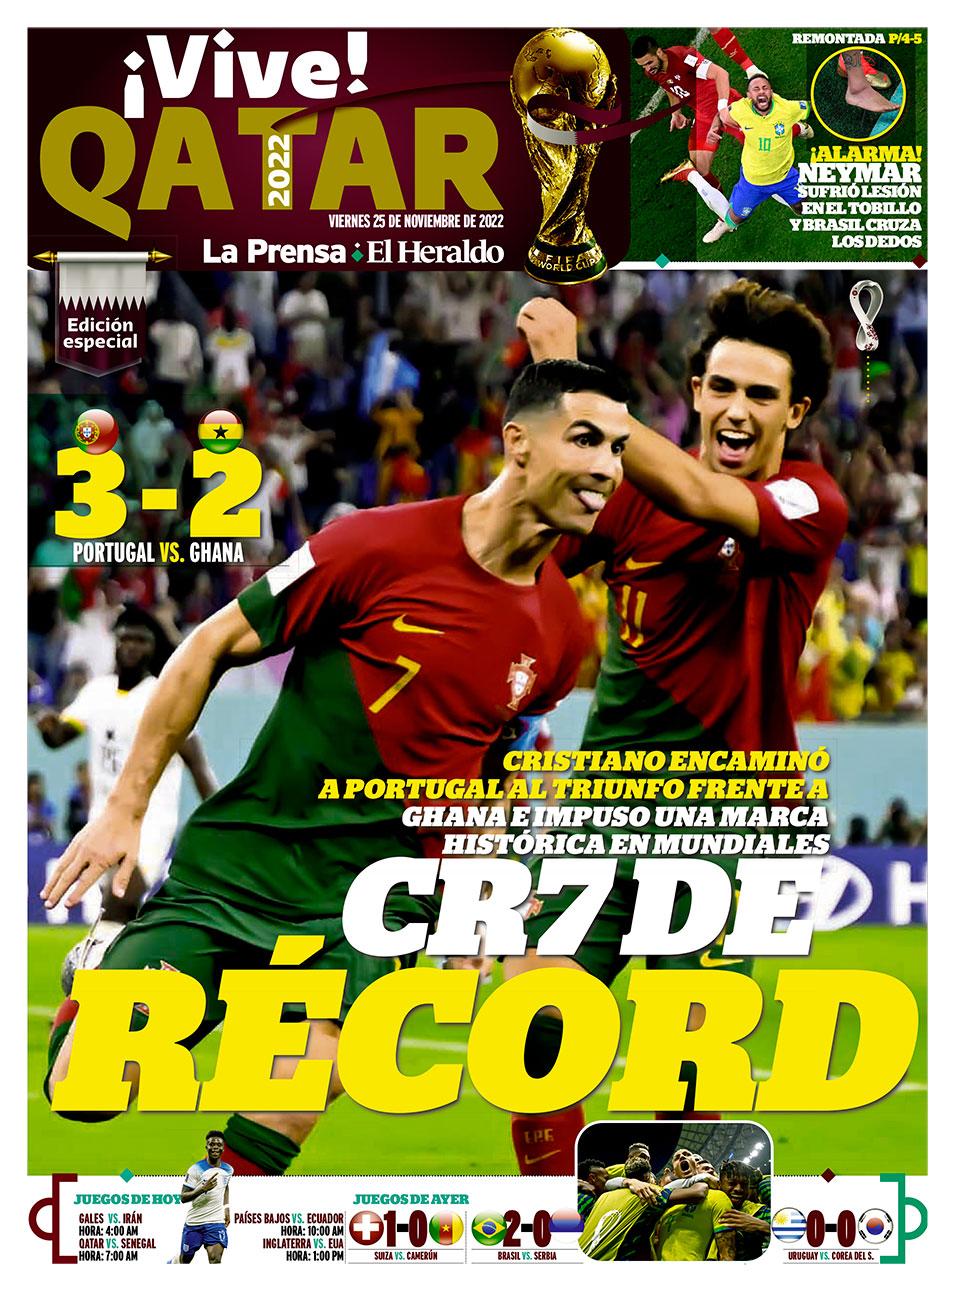 Cristiano encaminó a Portugal al triunfo ante Ghana e impulsó una marca histórica en mundiales.